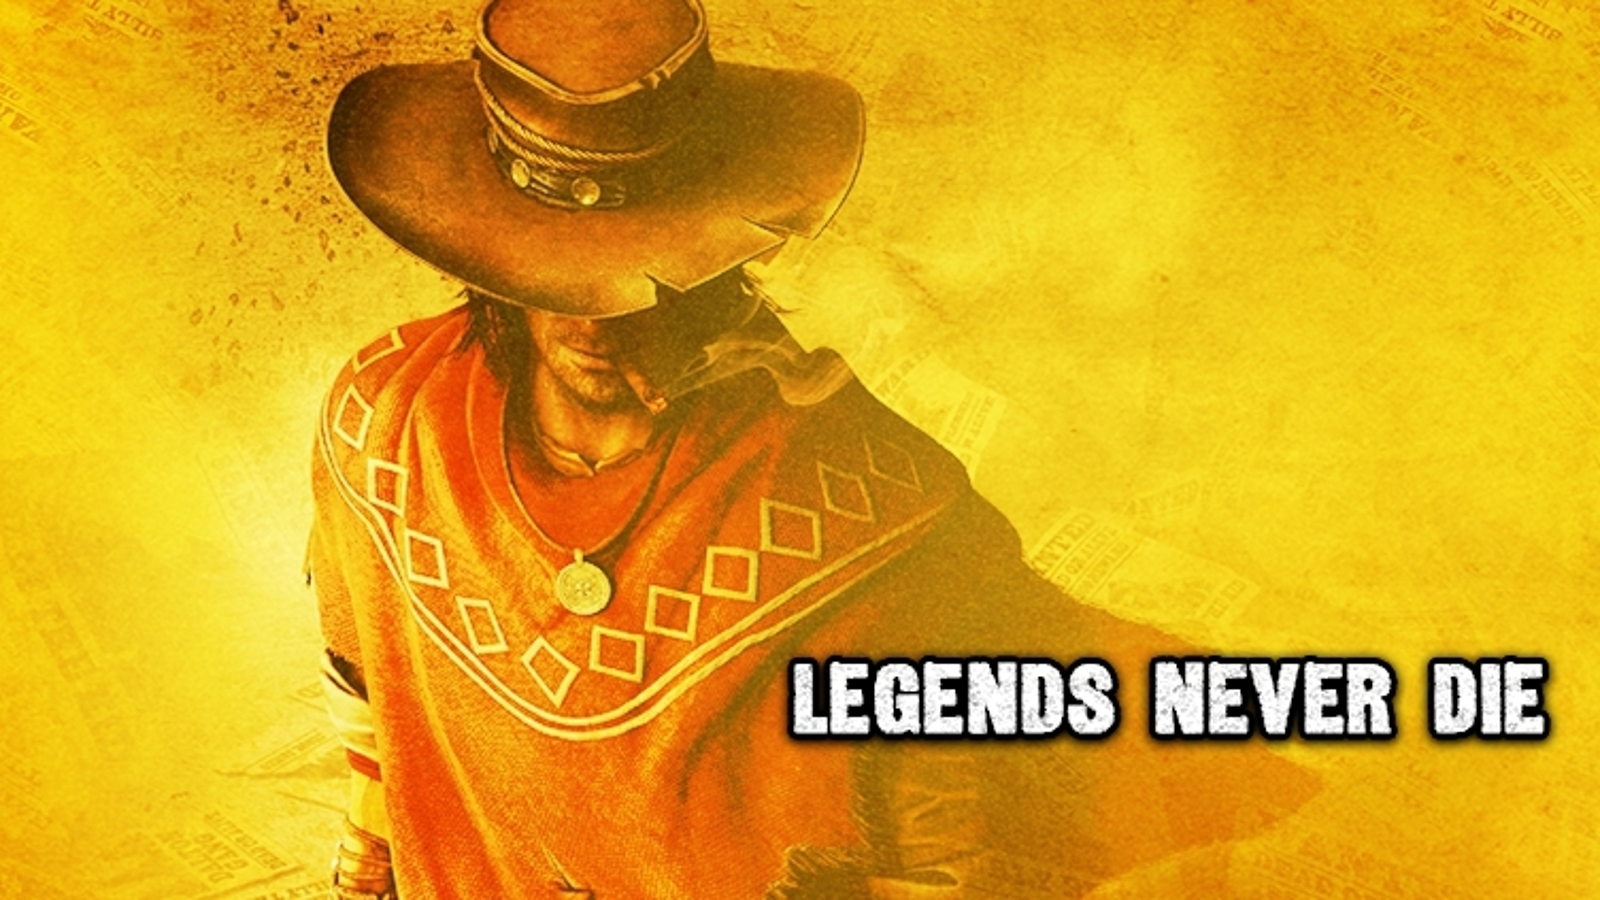 100+] Legends Never Die Wallpapers